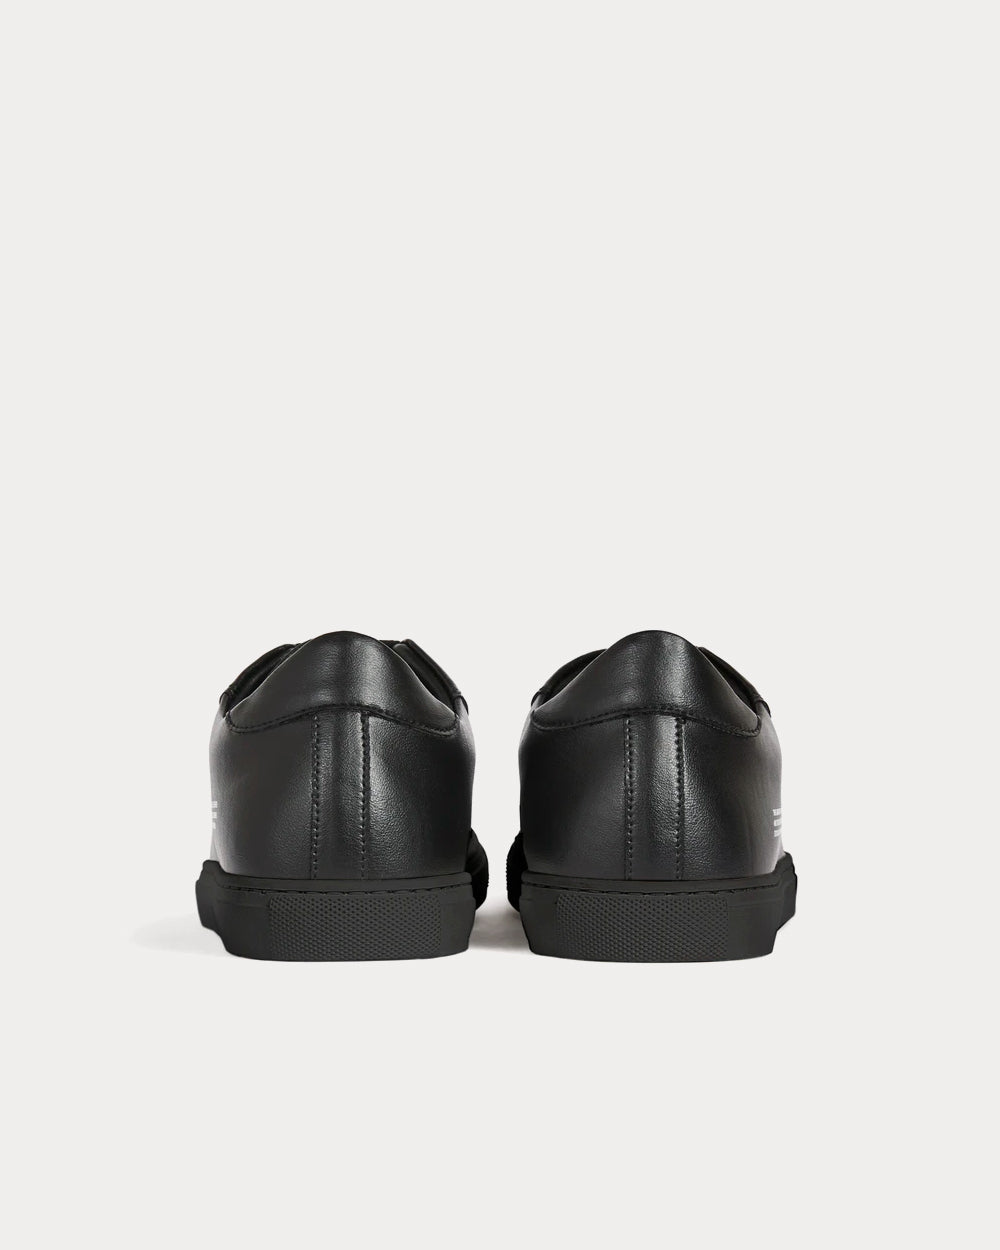 Pangaia - Grape Leather Black Low Top Sneakers